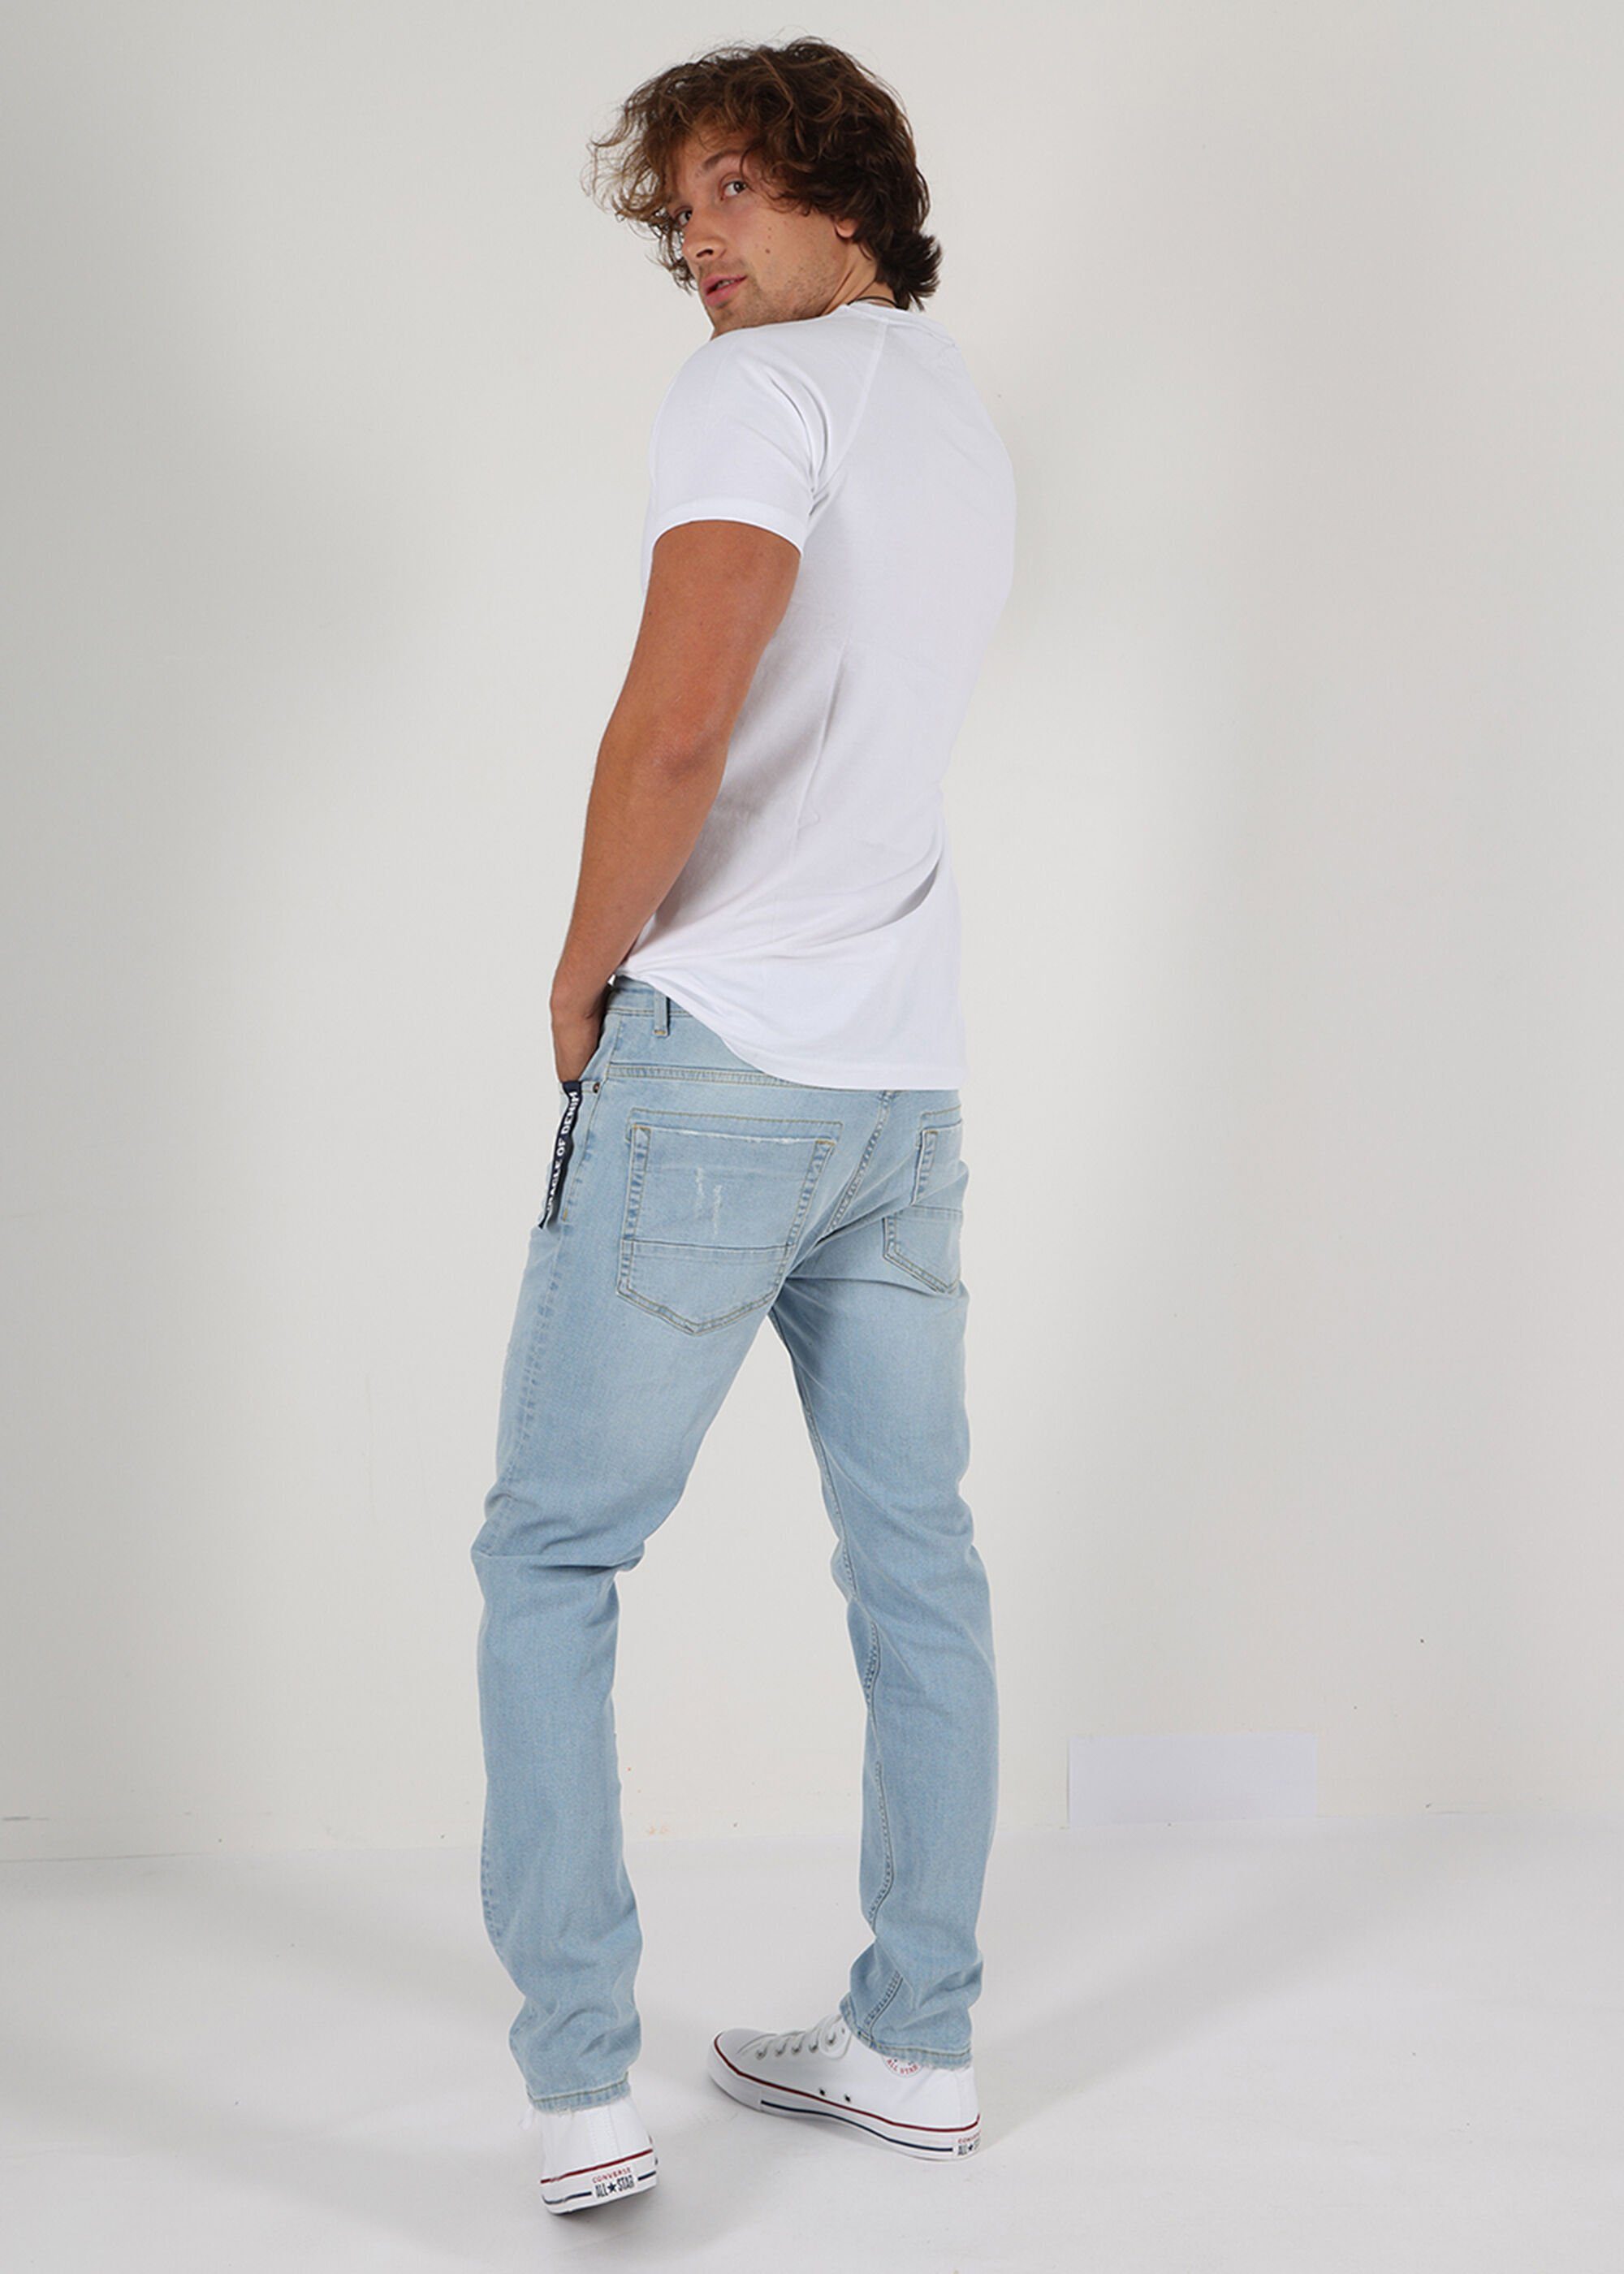 of Fit Denim Slim Hochwertige Marcel Denimqualität 5-Pocket-Jeans Miracle